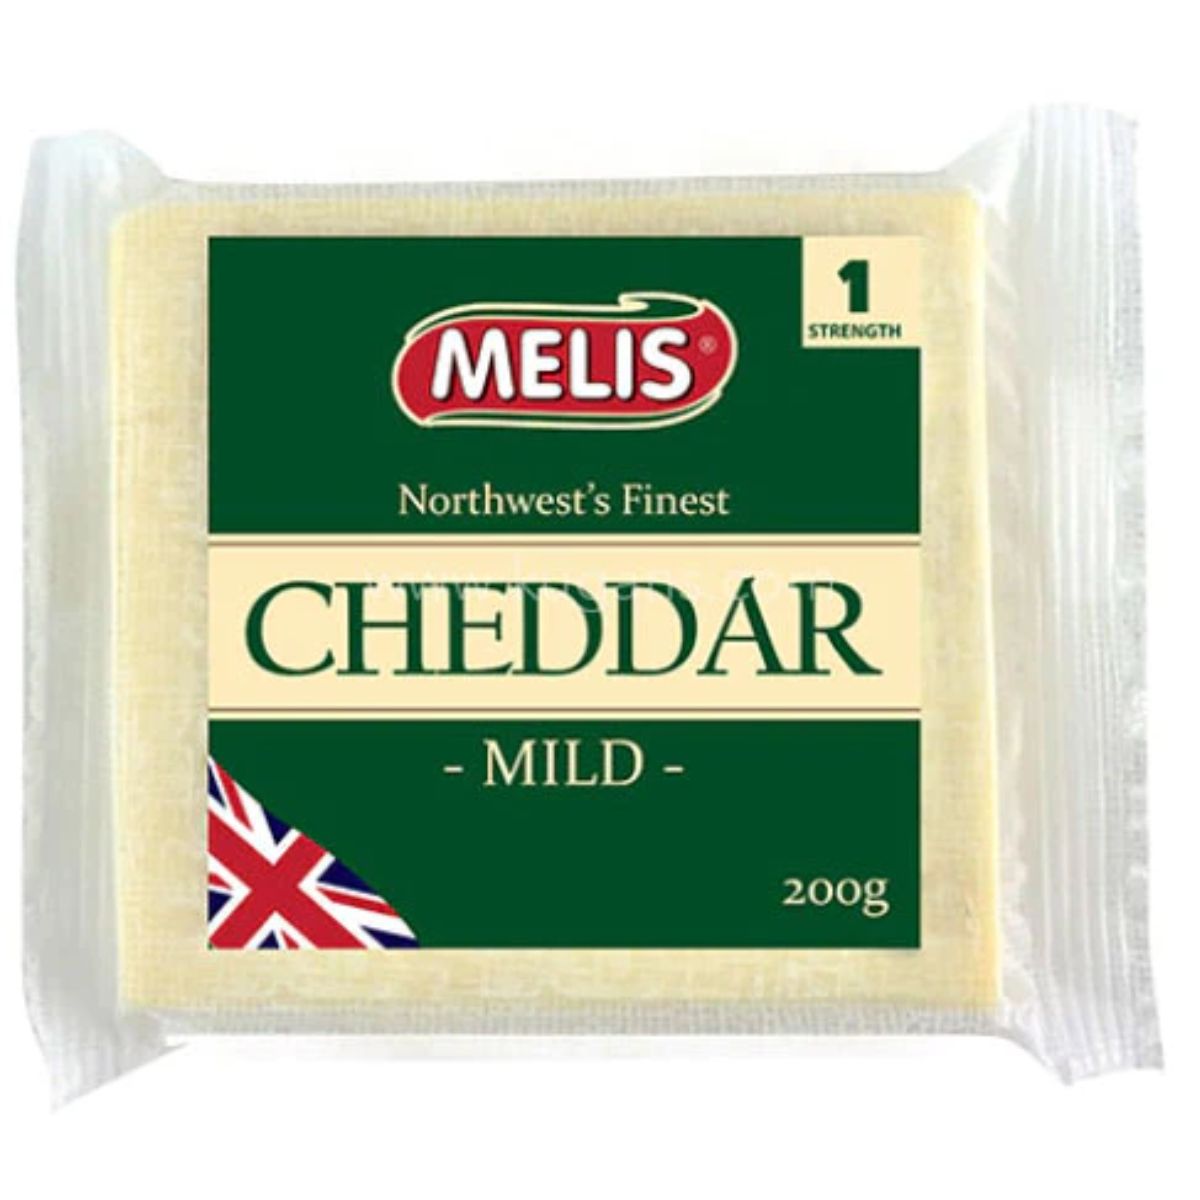 Melis - Cheddar Mild - 200g north's finest cheddar milk.